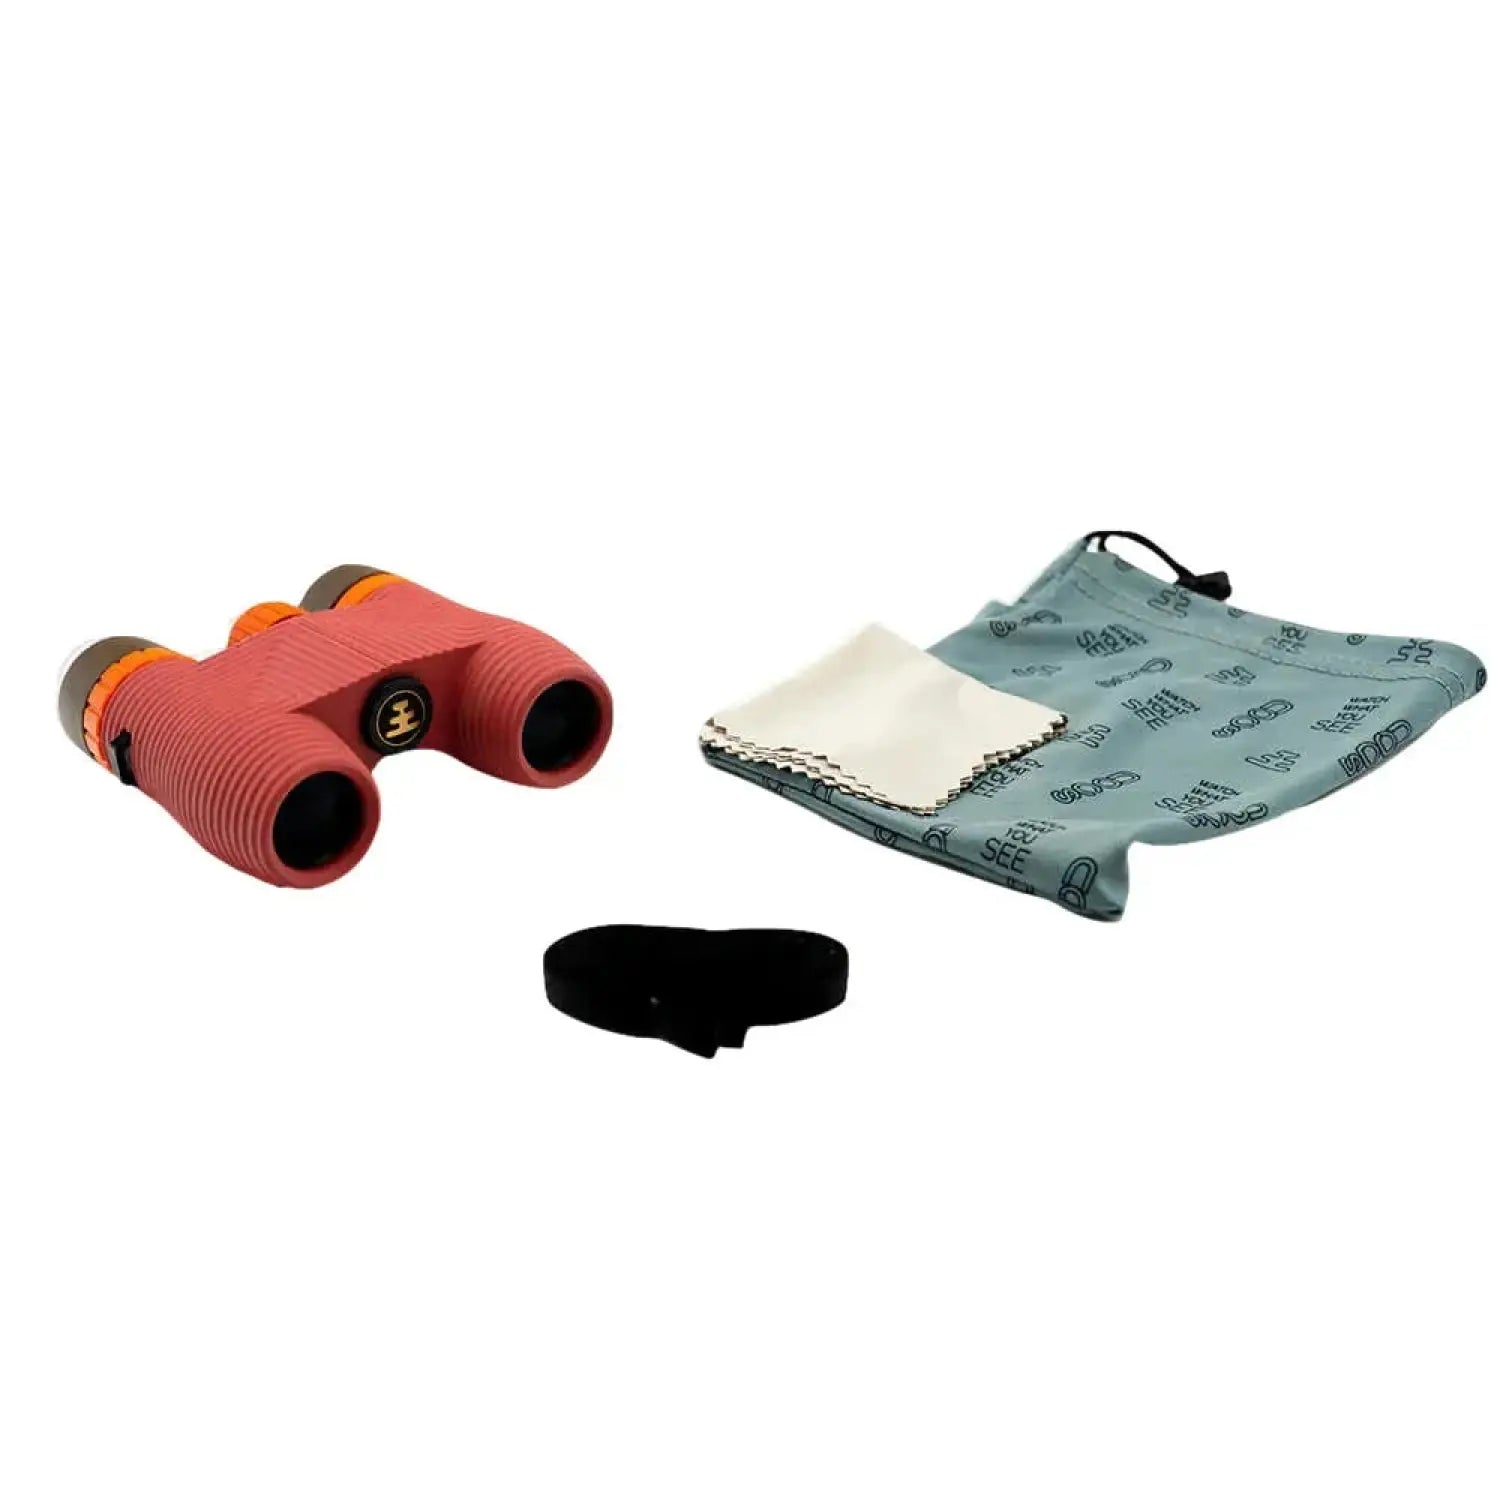 Nocs Standard Issue 10x25 Waterproof Binoculars, Manzanita Red, set view